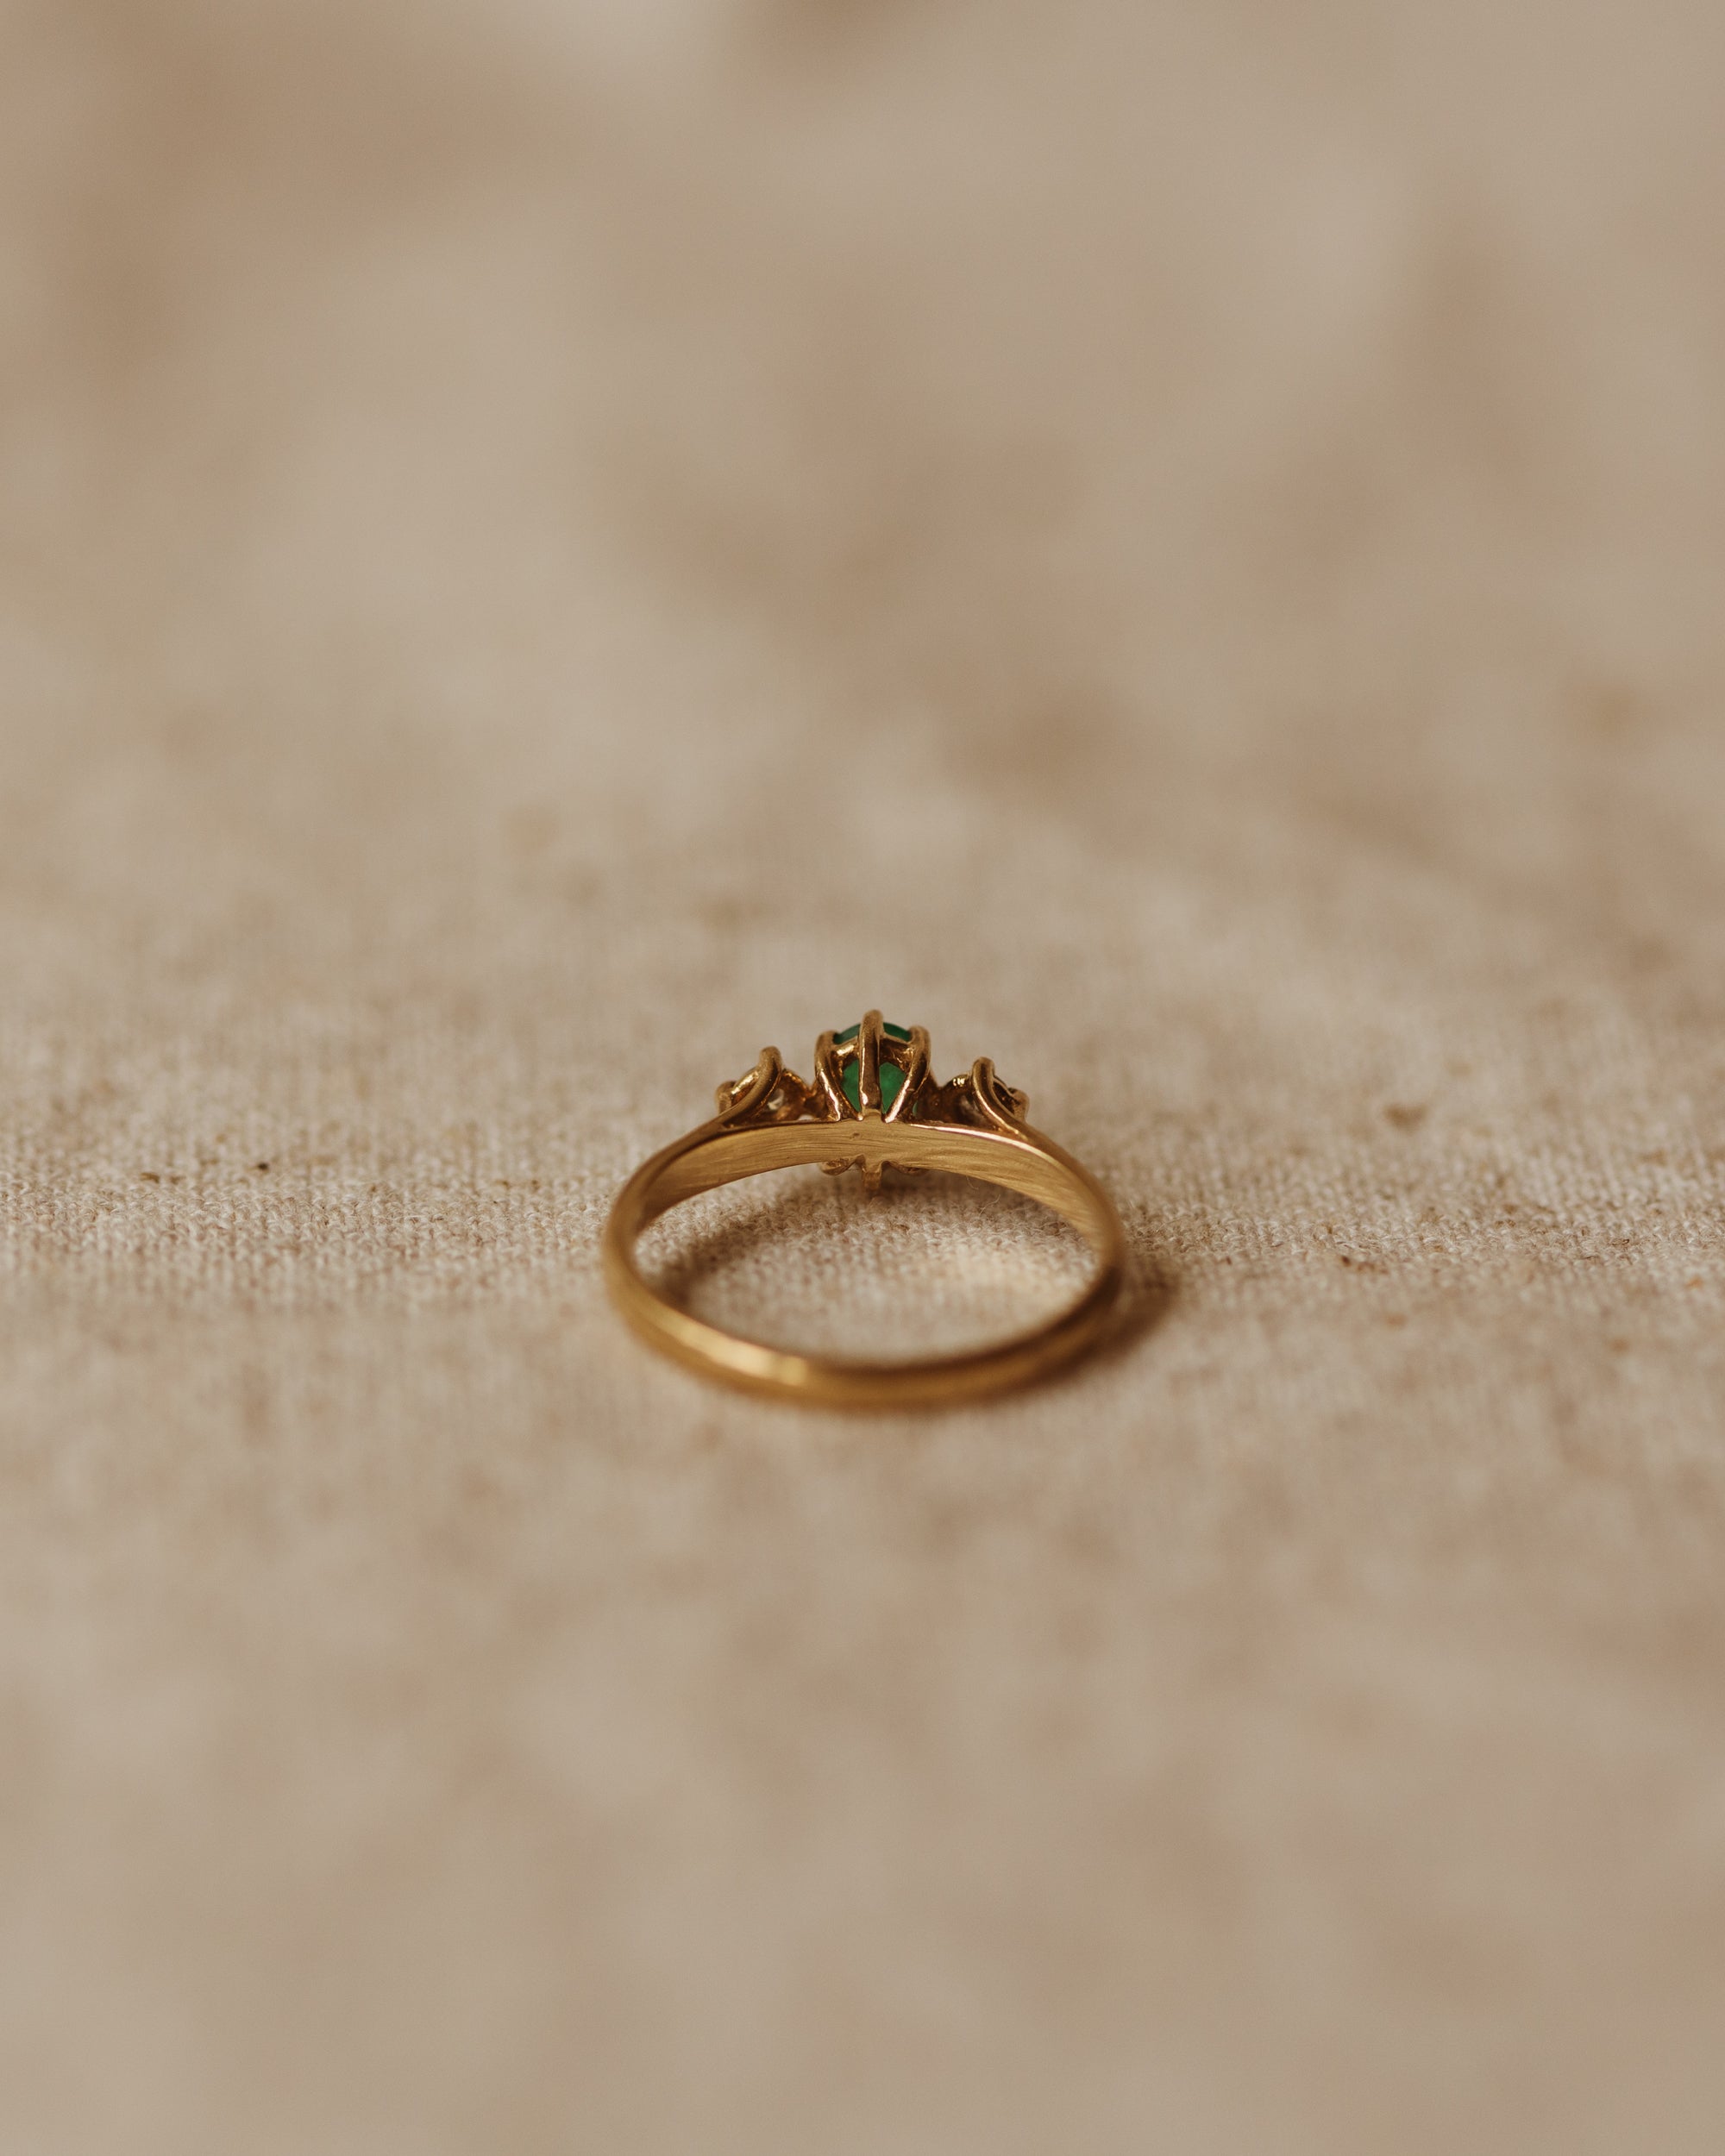 Dahlia Vintage 9ct Gold Emerald & Diamond Ring